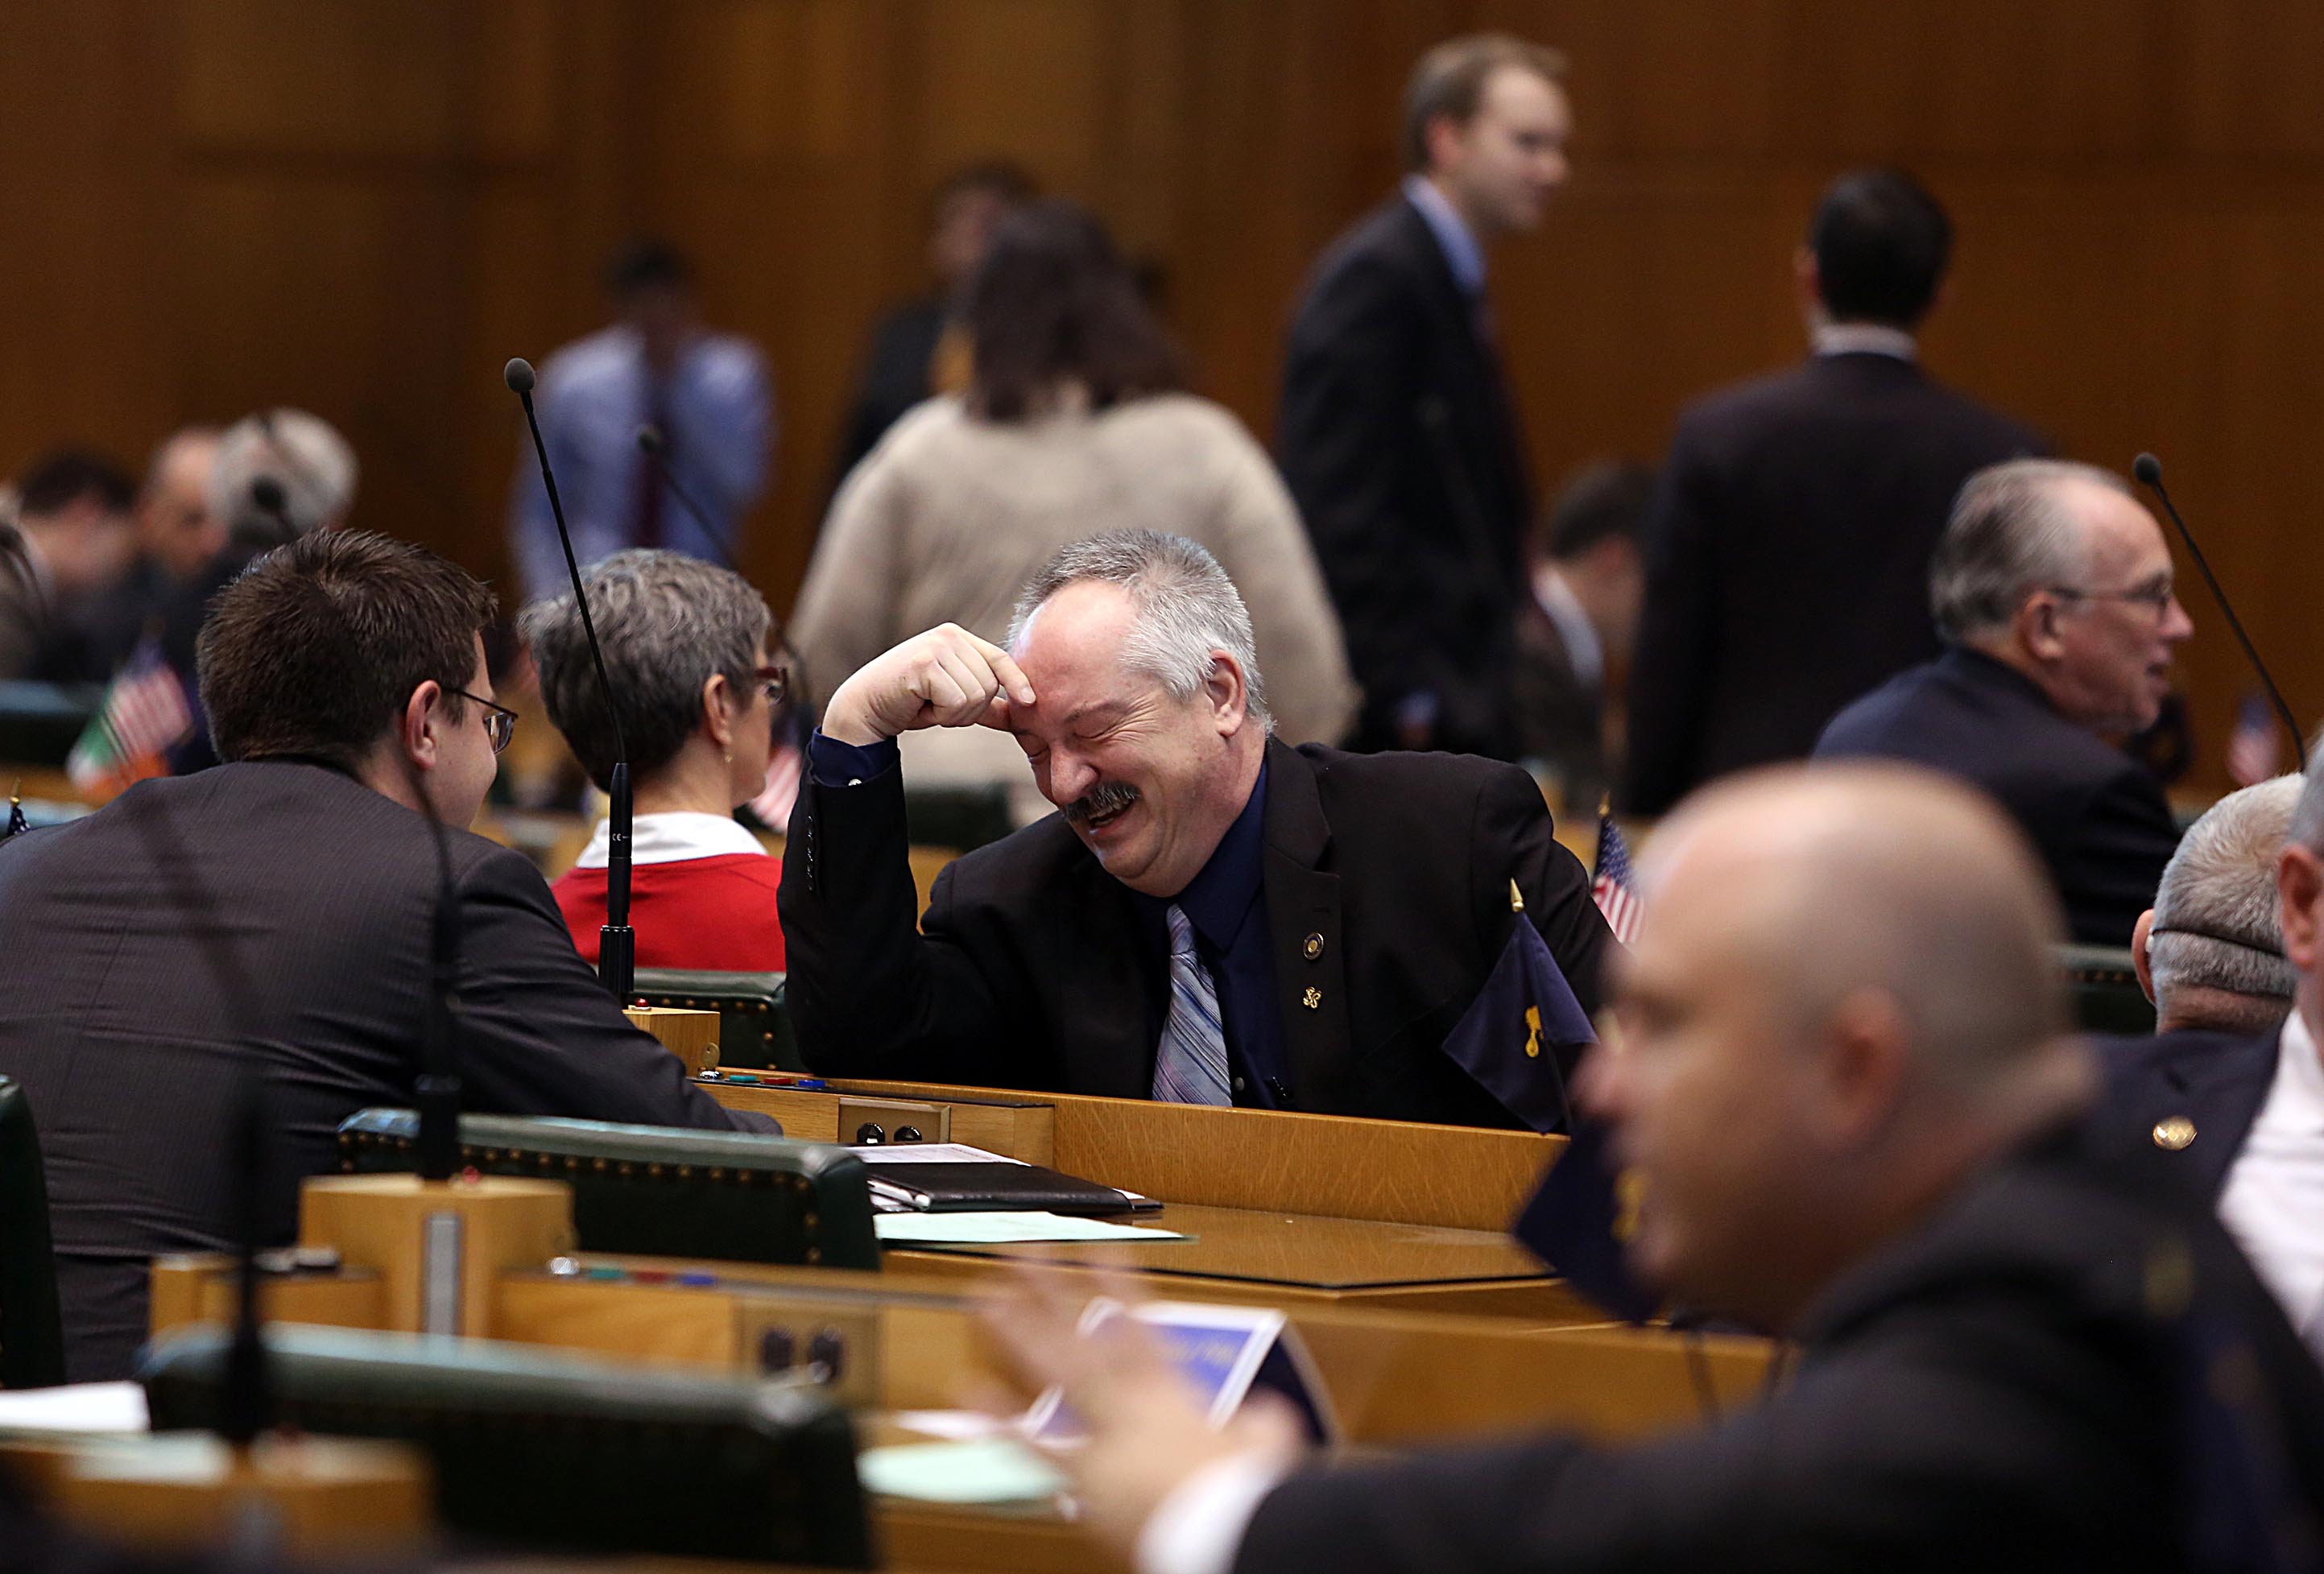 Rep. Chris Gorsek D-Troutdale, center, laughs with Rep. Brent Barton D-Oregon City, left, as the Oregon House convenes for the 2014 session Monday.